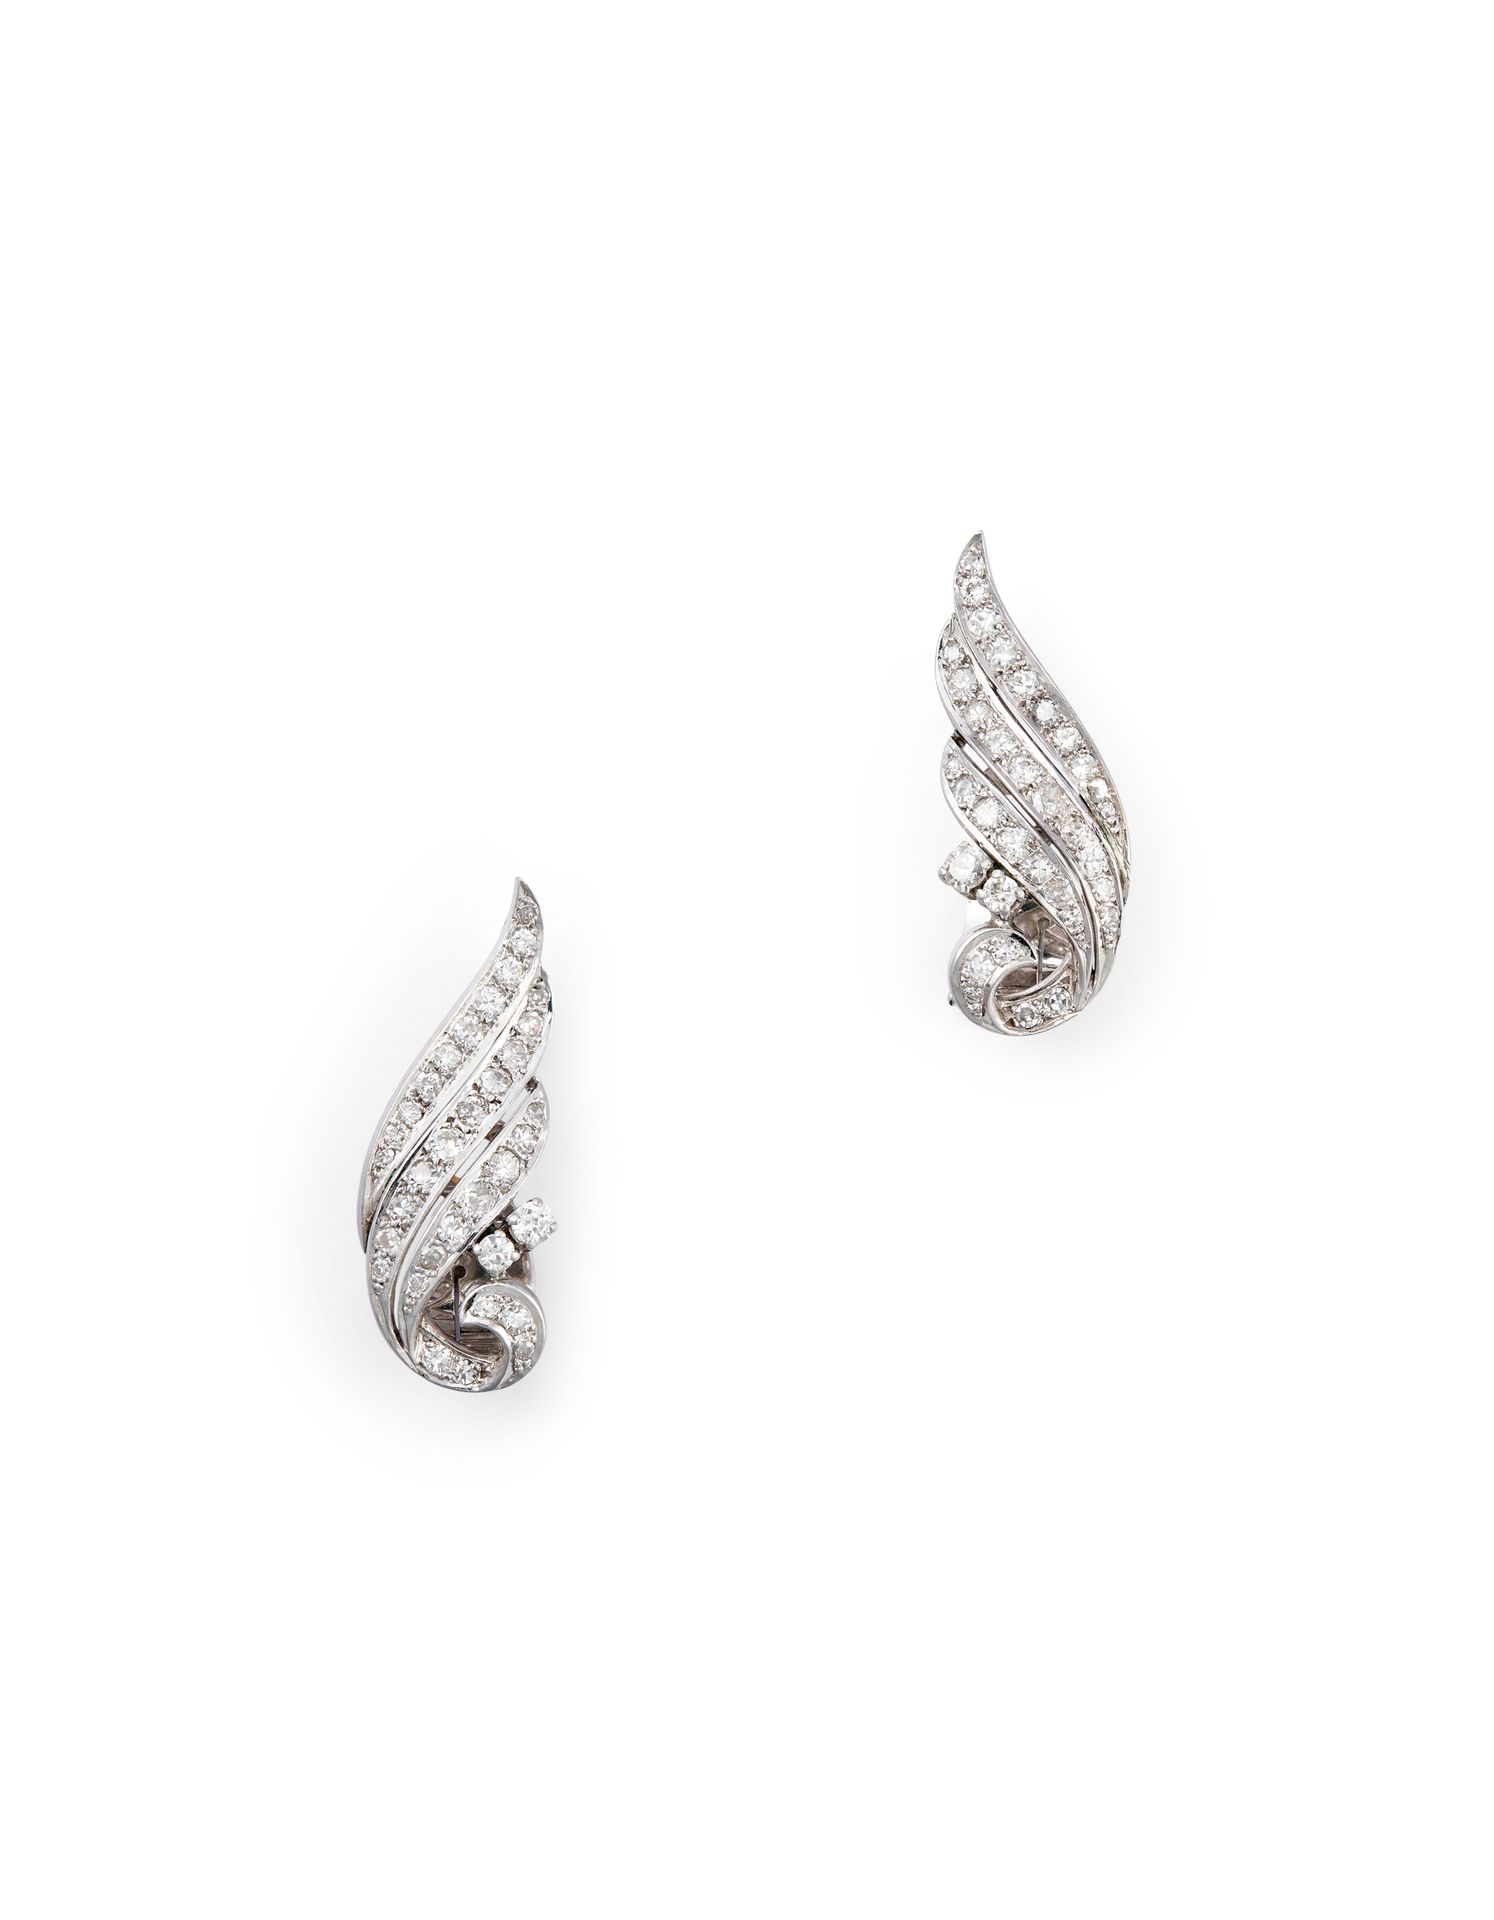 Null 1950年 铂金钻石耳坠，每个耳坠都镶嵌有3颗明亮式切割钻石，最后是一个镶嵌有2颗明亮式切割钻石的涡旋。

印记：无

尺寸：3.5 x 1.5 cm&hellip;